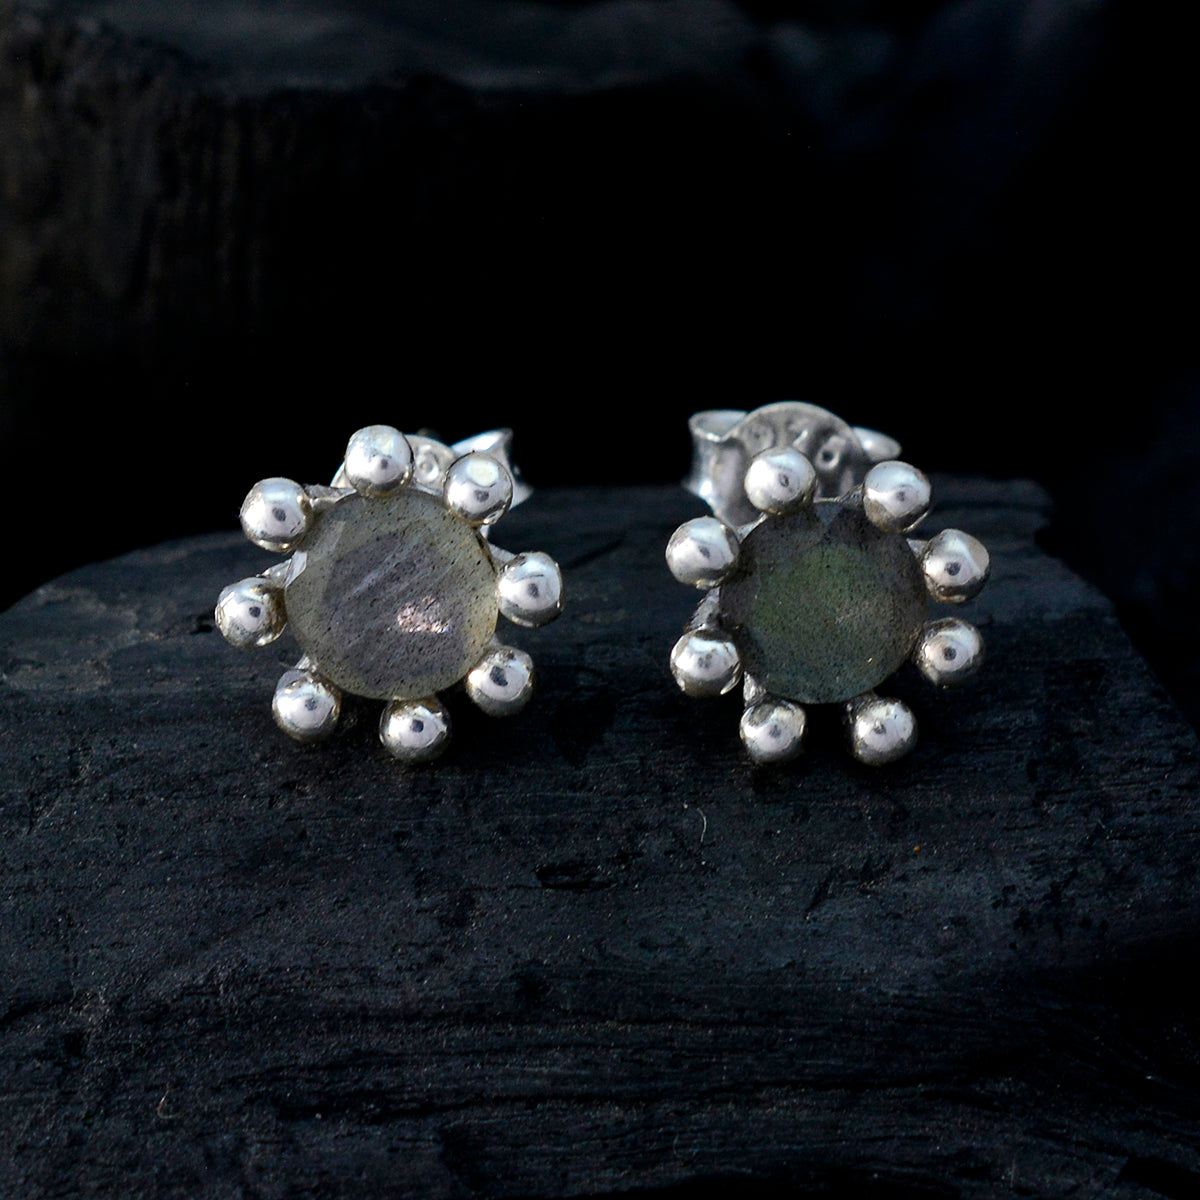 Riyo Nice Gemstone round Faceted Grey Labradorite Silver Earring gift for anniversary